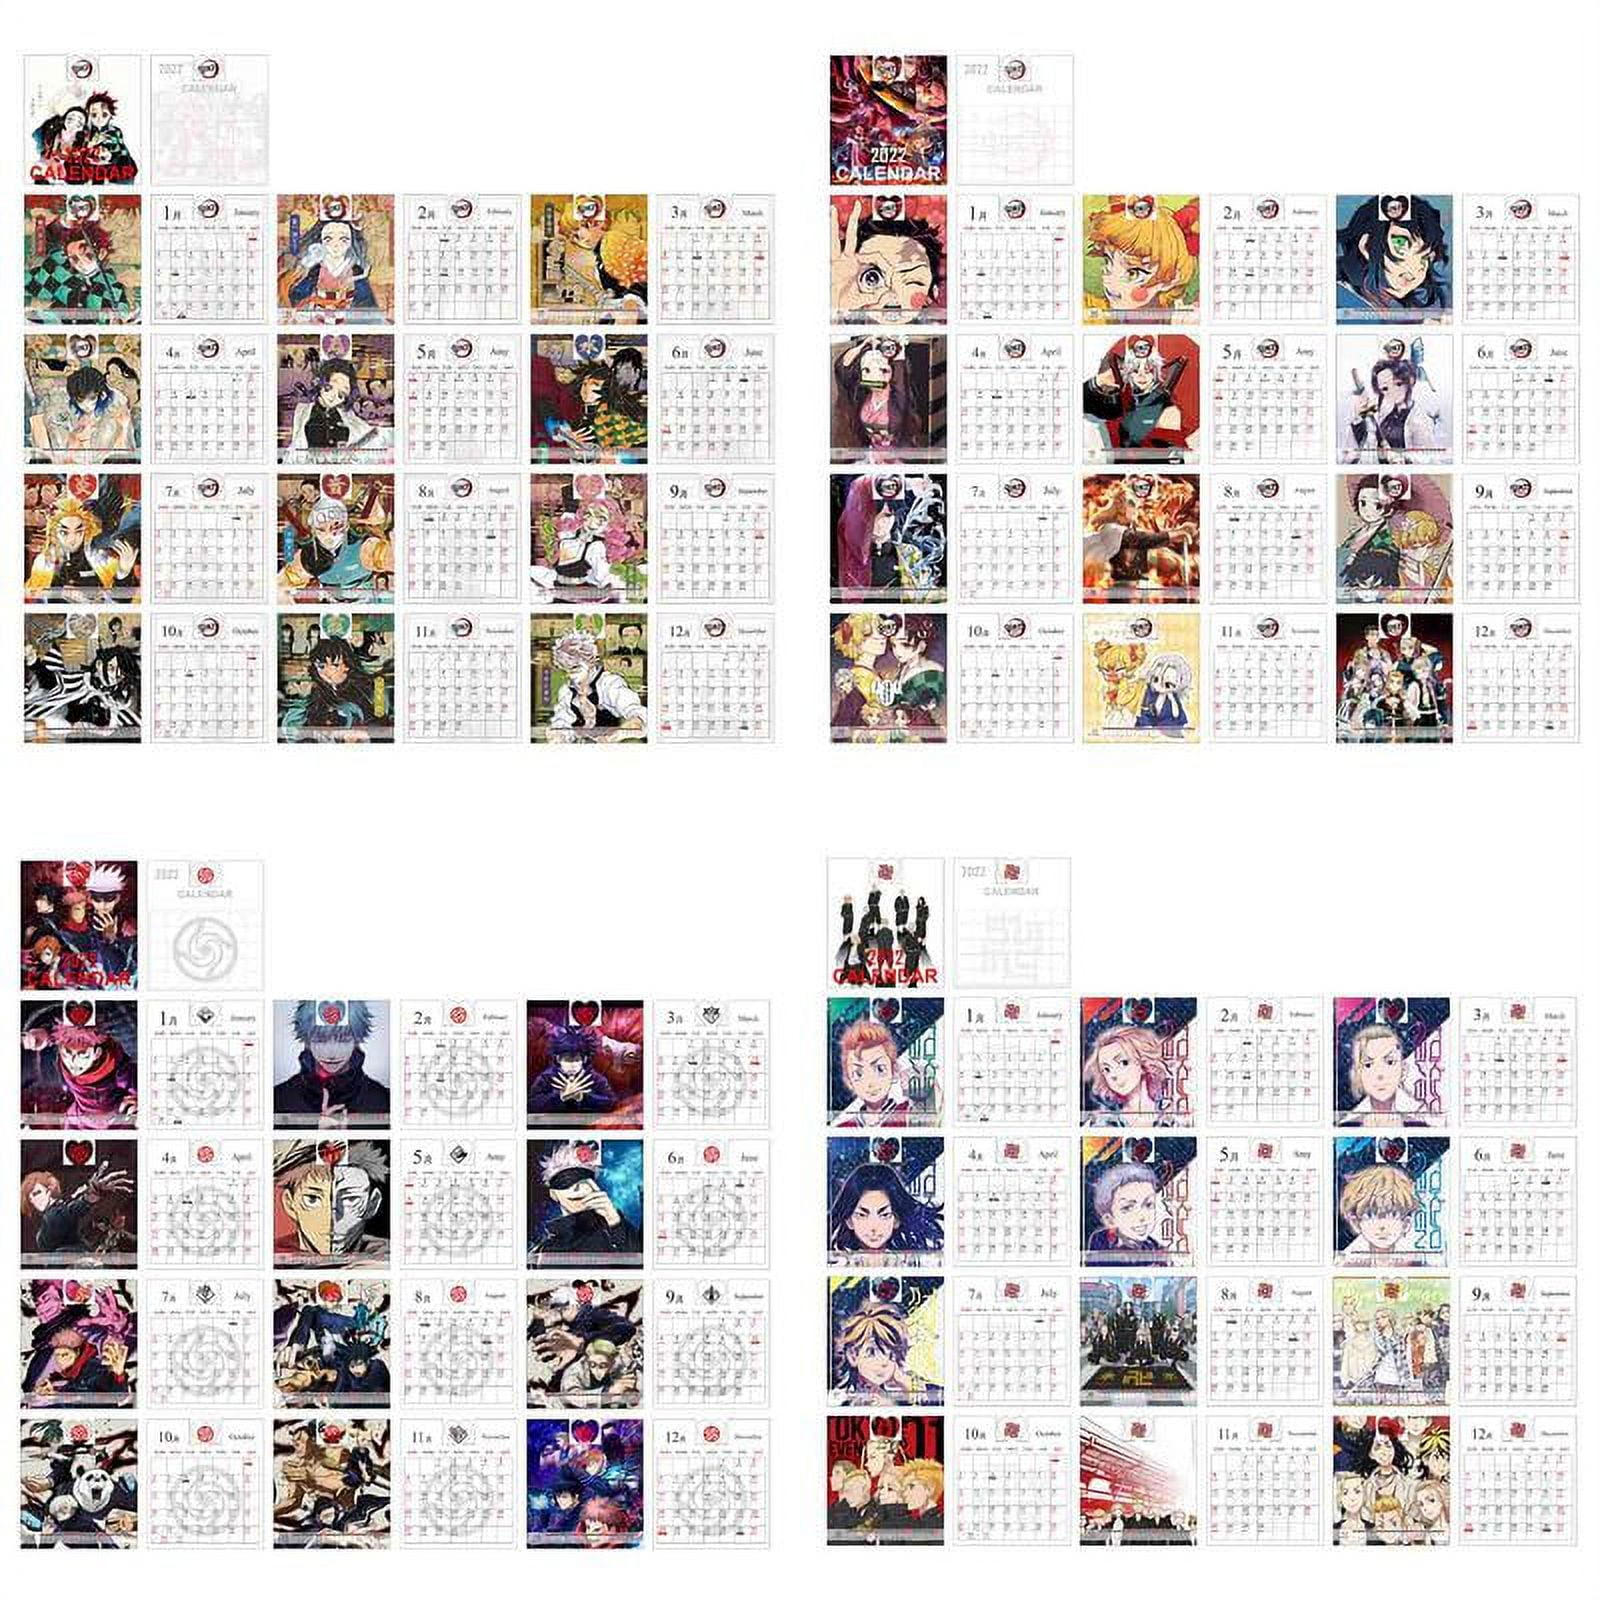  calendar 2022: jujutsu-kạisen 2022 Calendar OFFICIAL 2022  Calendar - Anime Manga Calendar 2022-2023, Calendar Planner - Kalendar  calendario calendrier  Supplies) - January 2022 to December 2023:  publishiner, clannderjujutsukaisen: Books